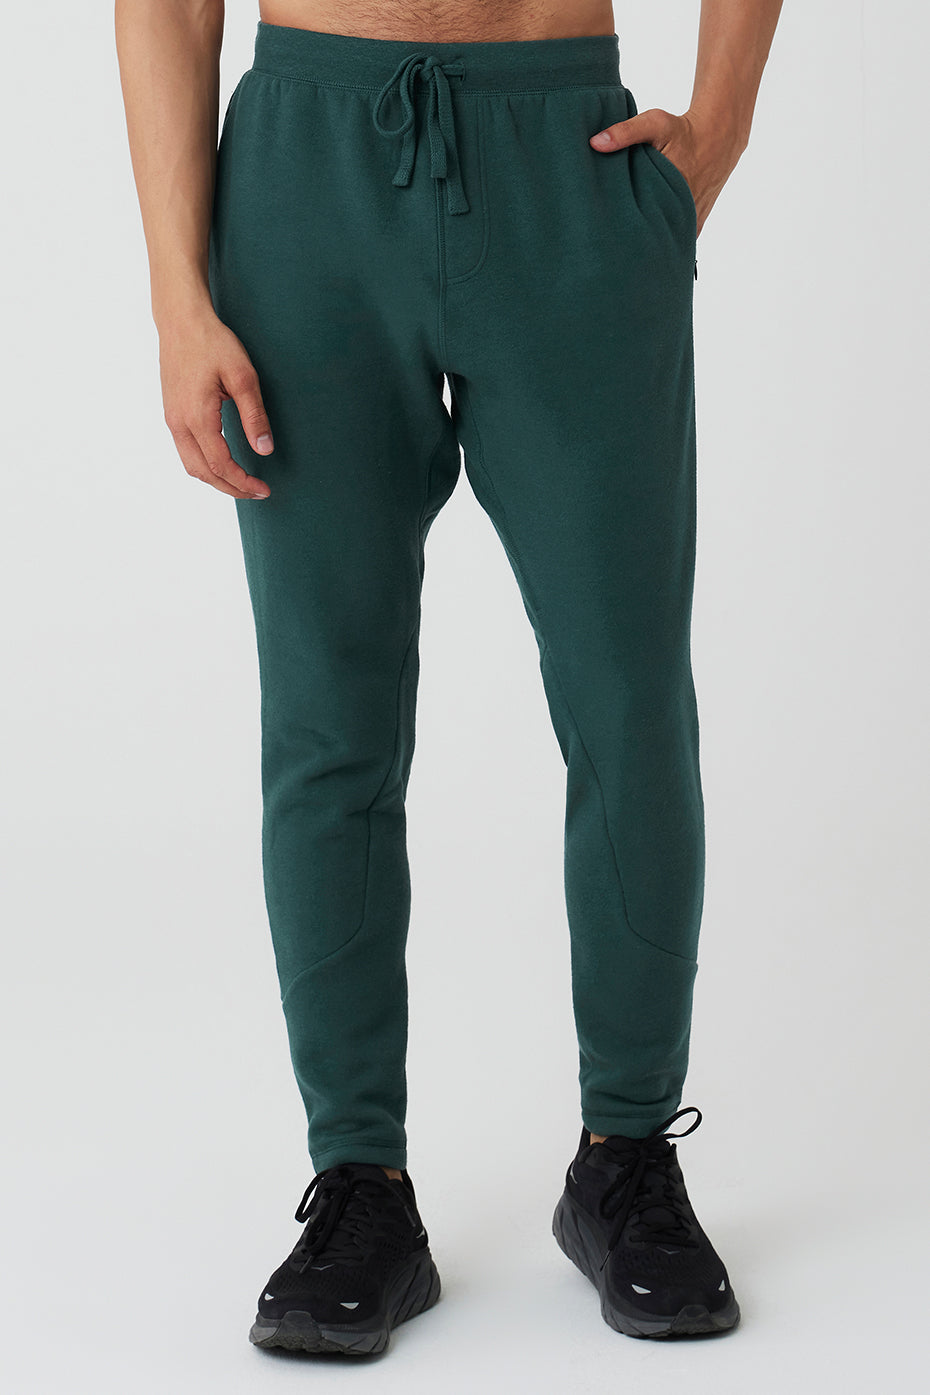 Alo Yoga Light Olive Green Oversized Accolade Sweatpants Size XS - $80 -  From Mia